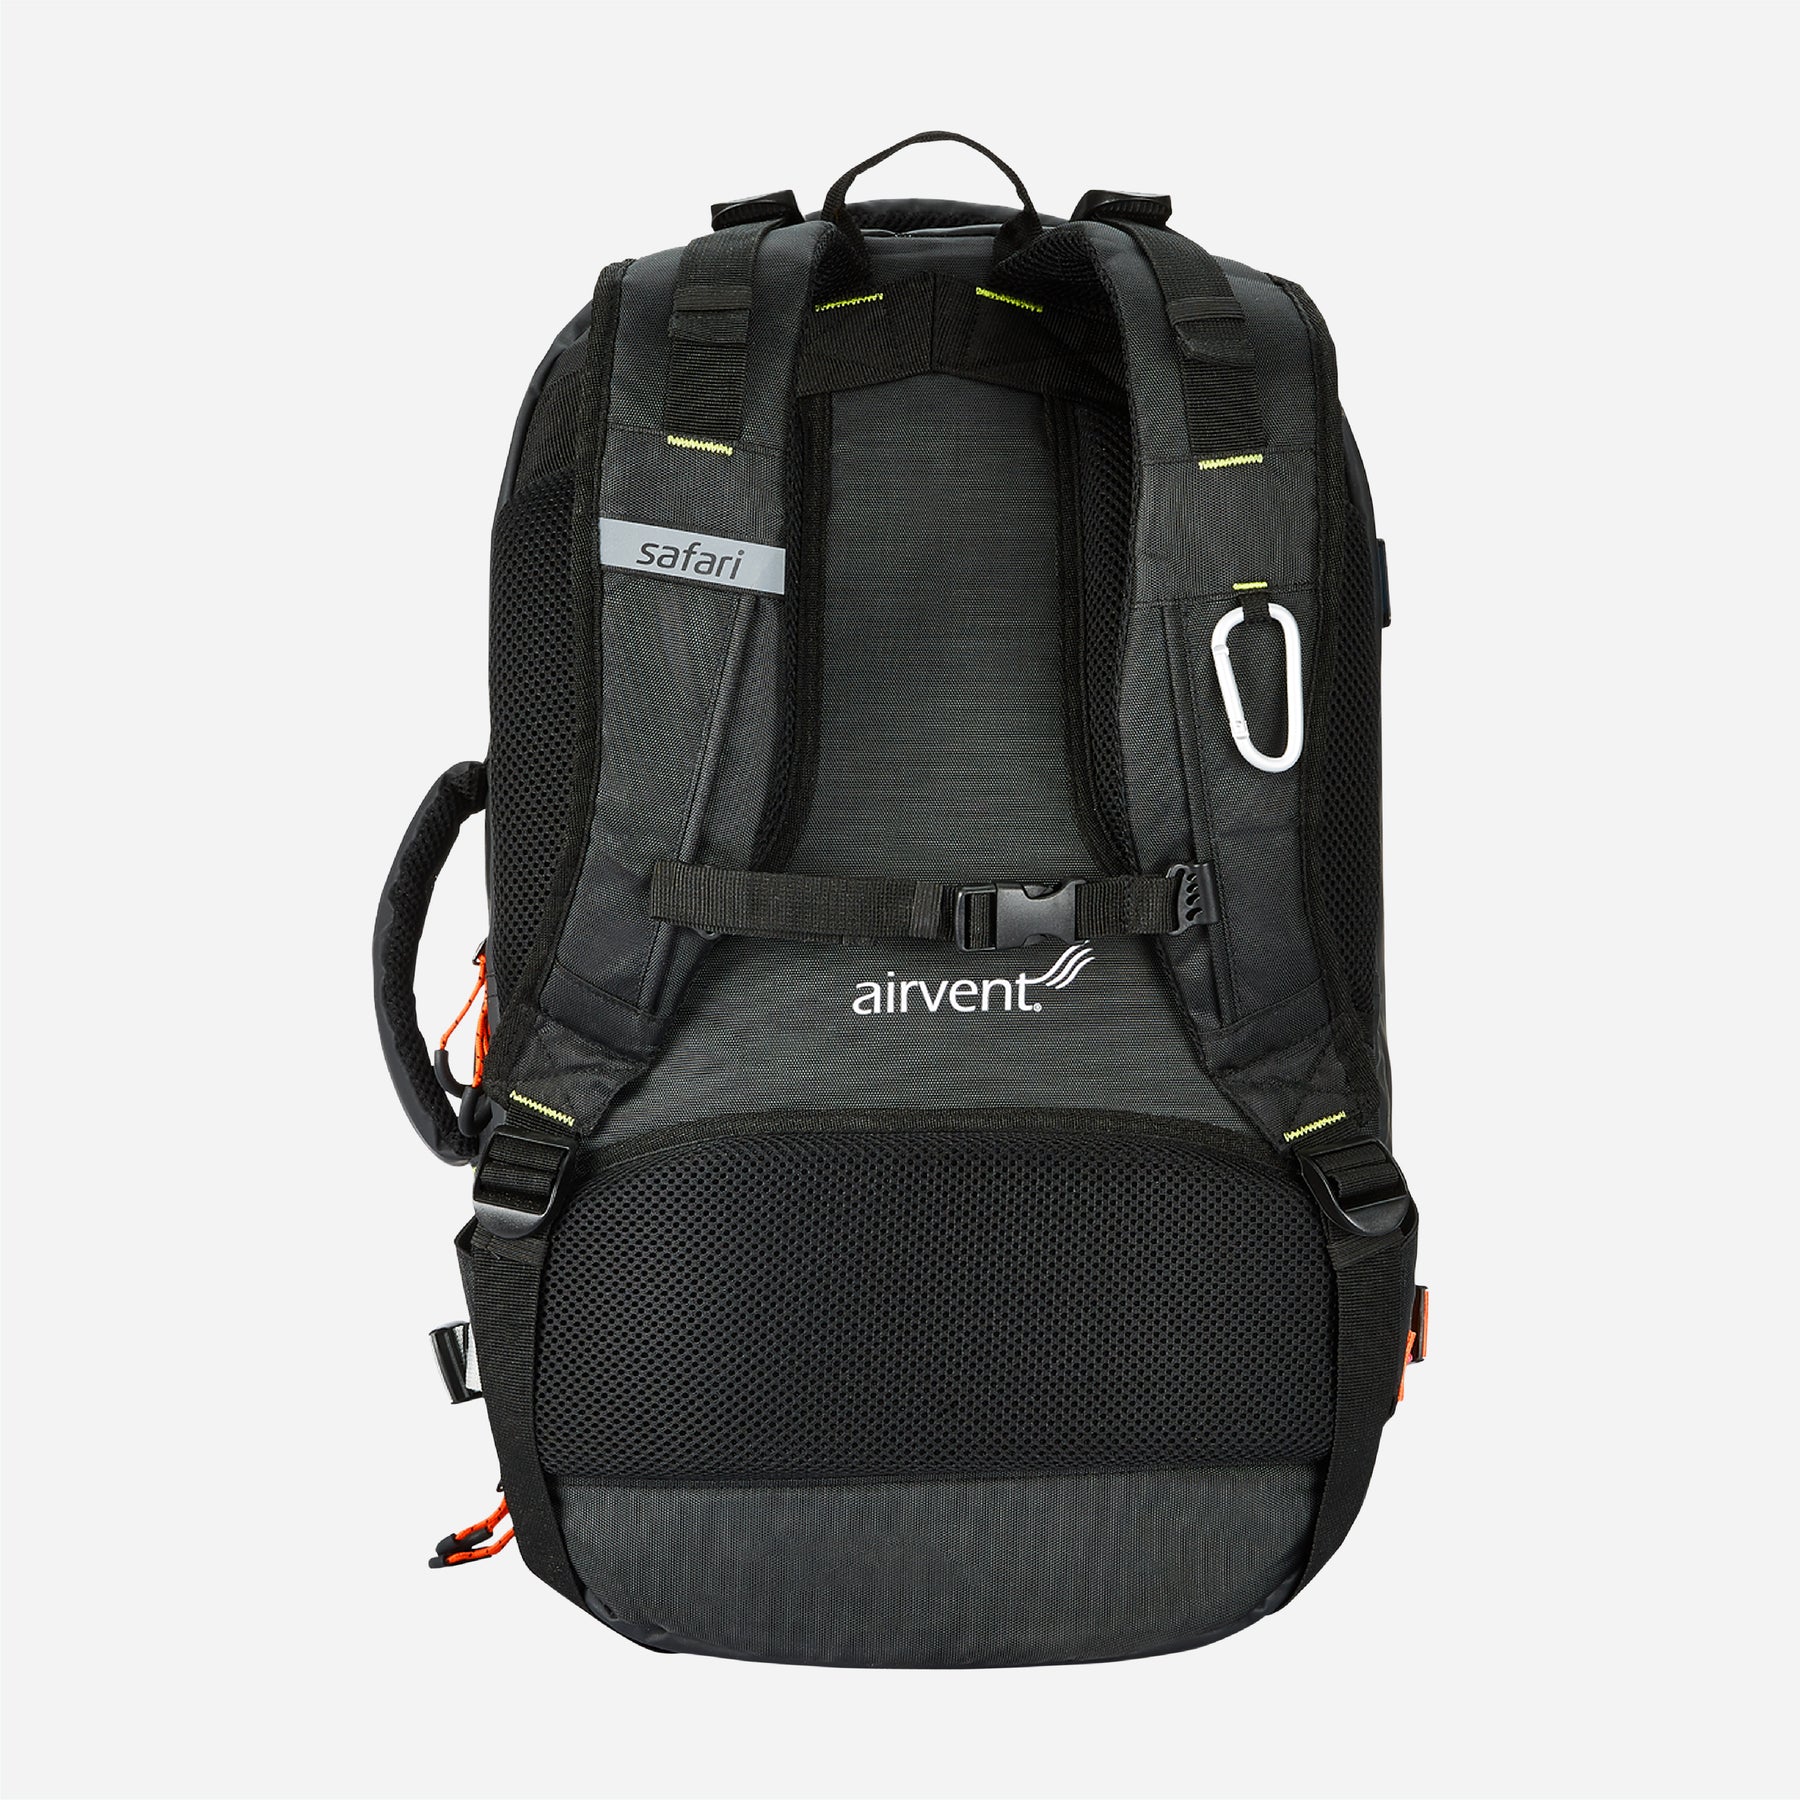 Safari Seek 45L Black Backpack and Curve Neck Pillow Set